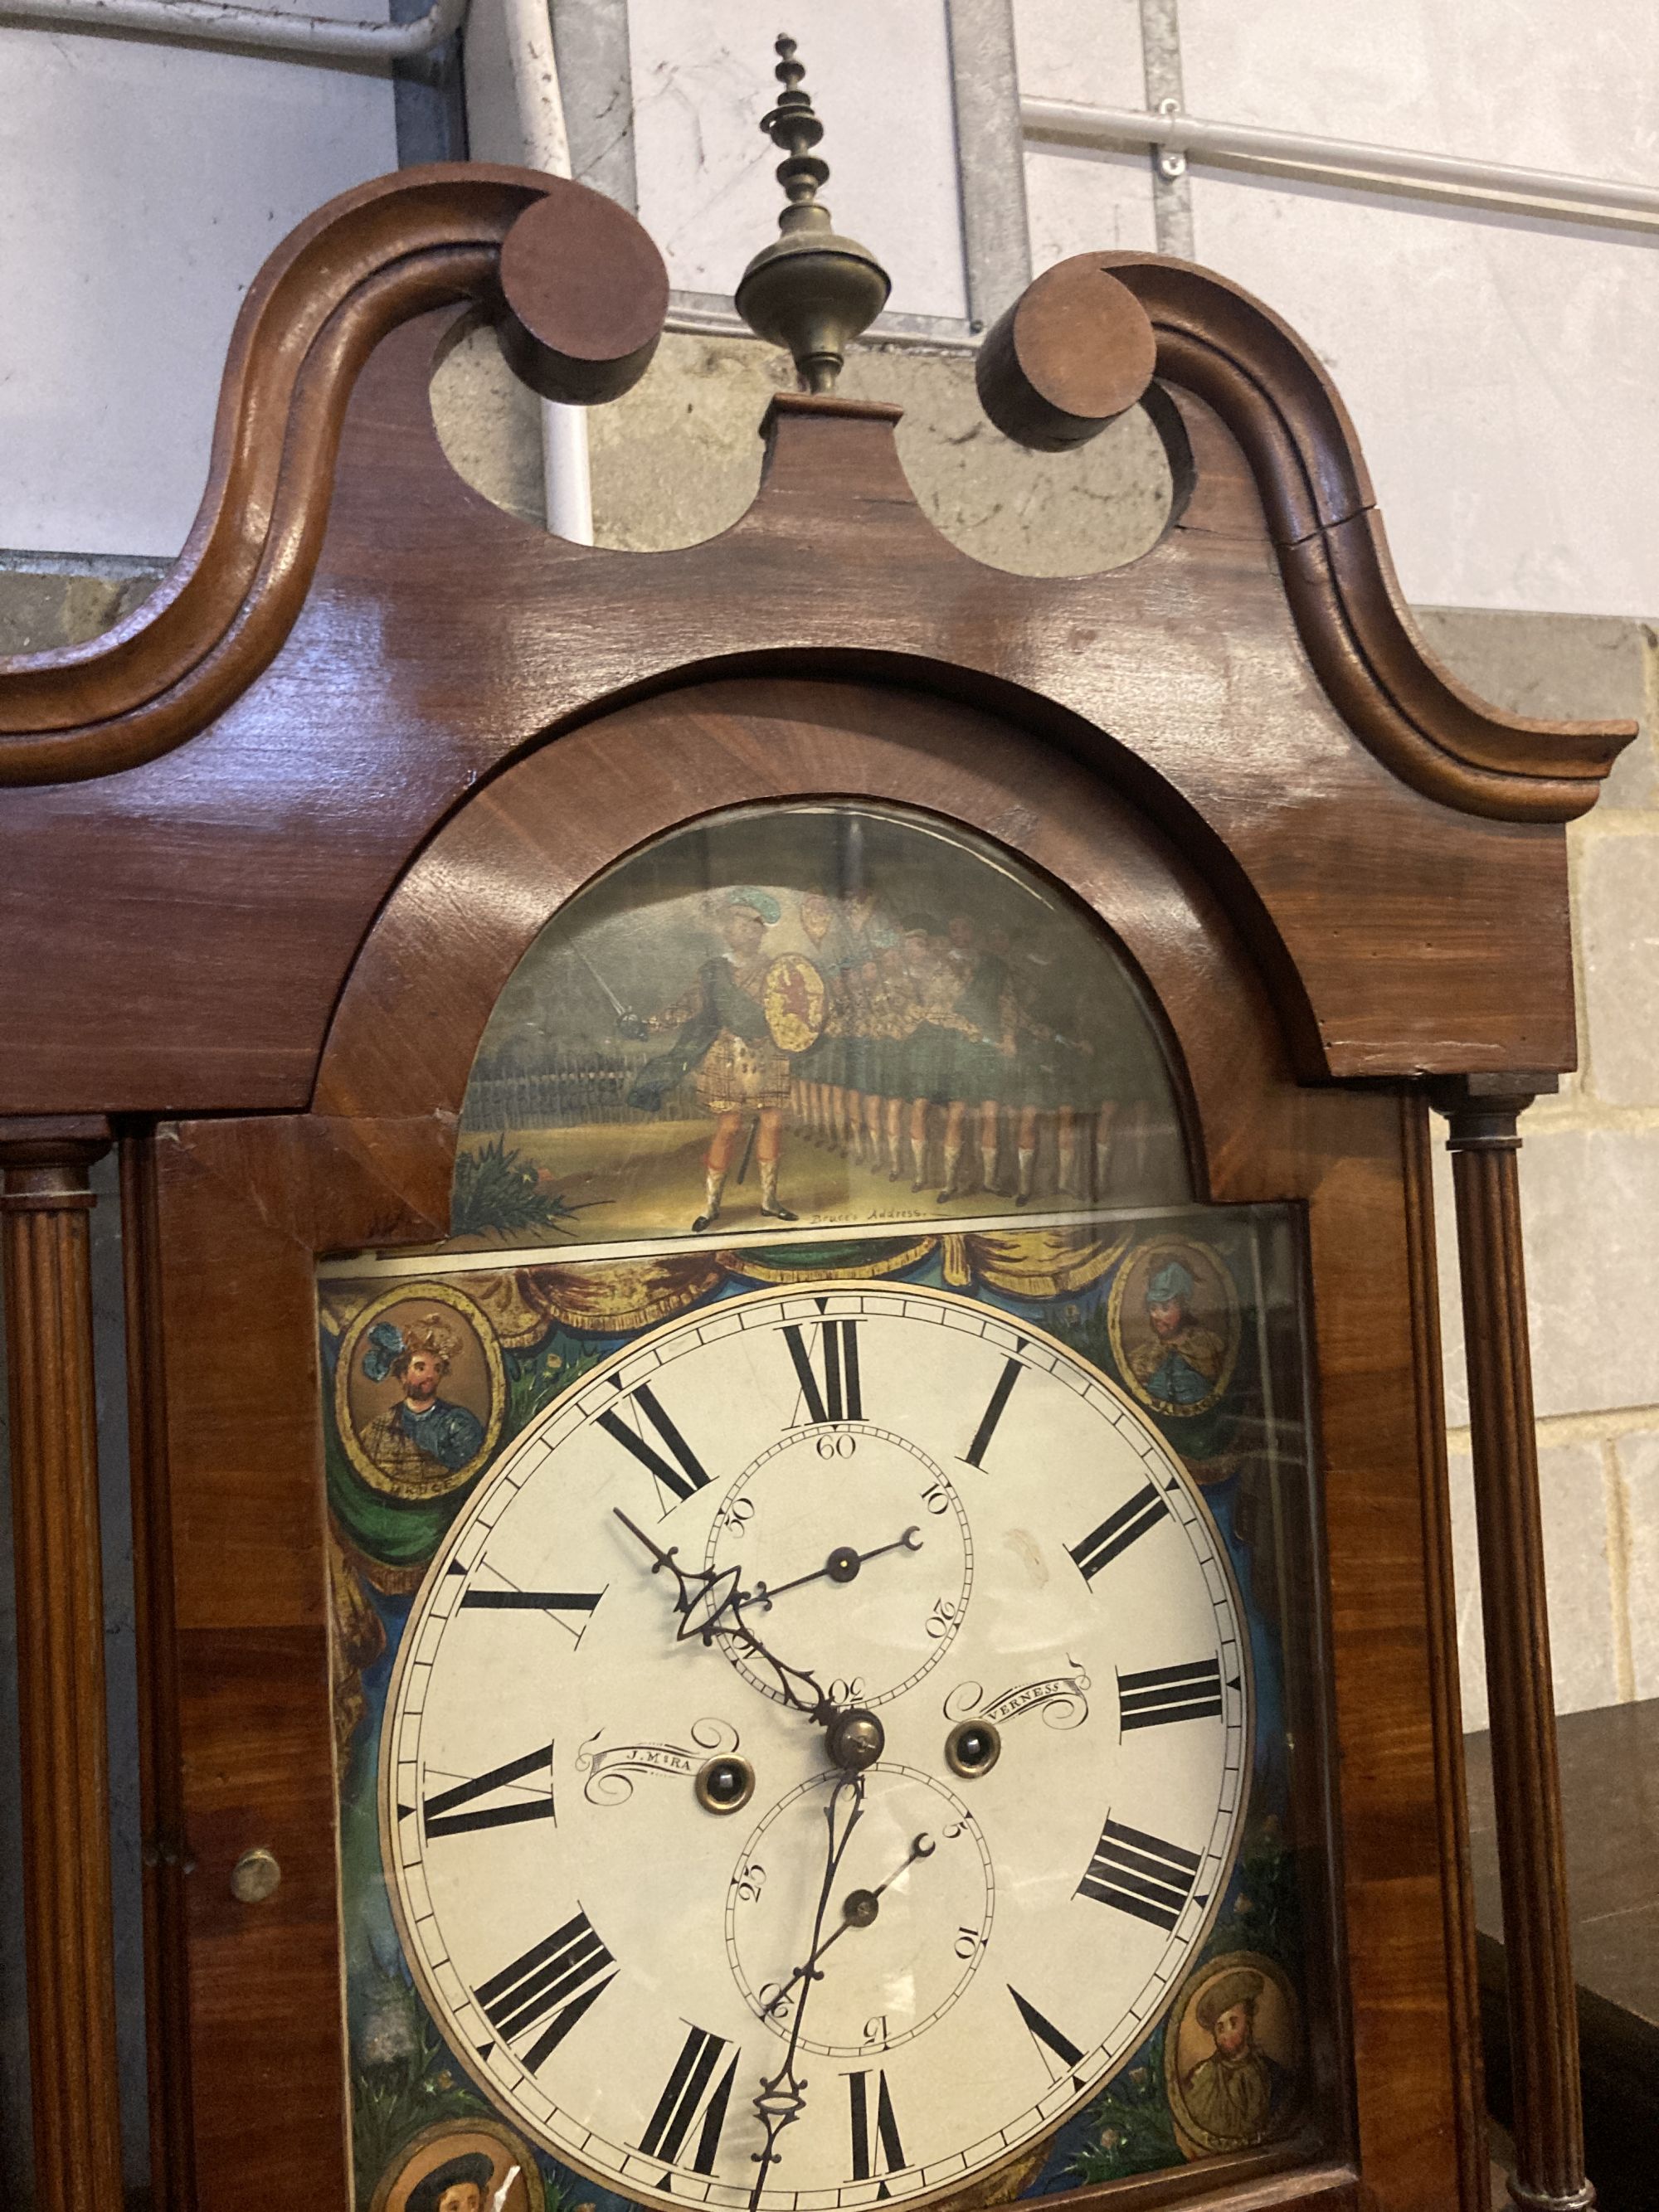 An early 19th century mahogany eight day longcase clock, height 218cm